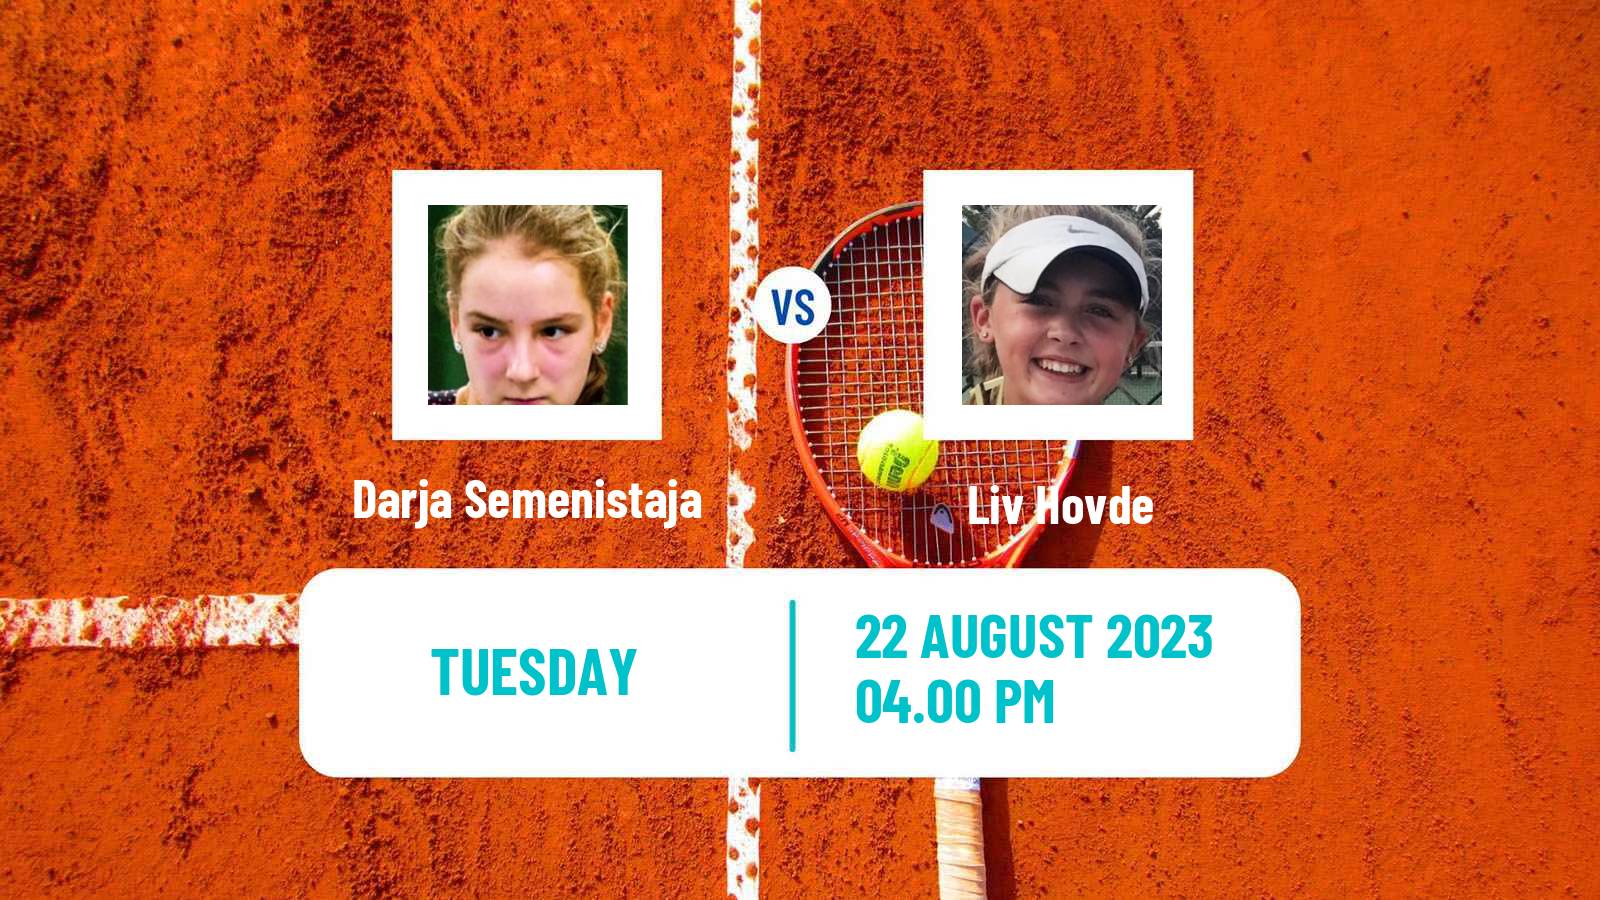 Tennis WTA US Open Darja Semenistaja - Liv Hovde